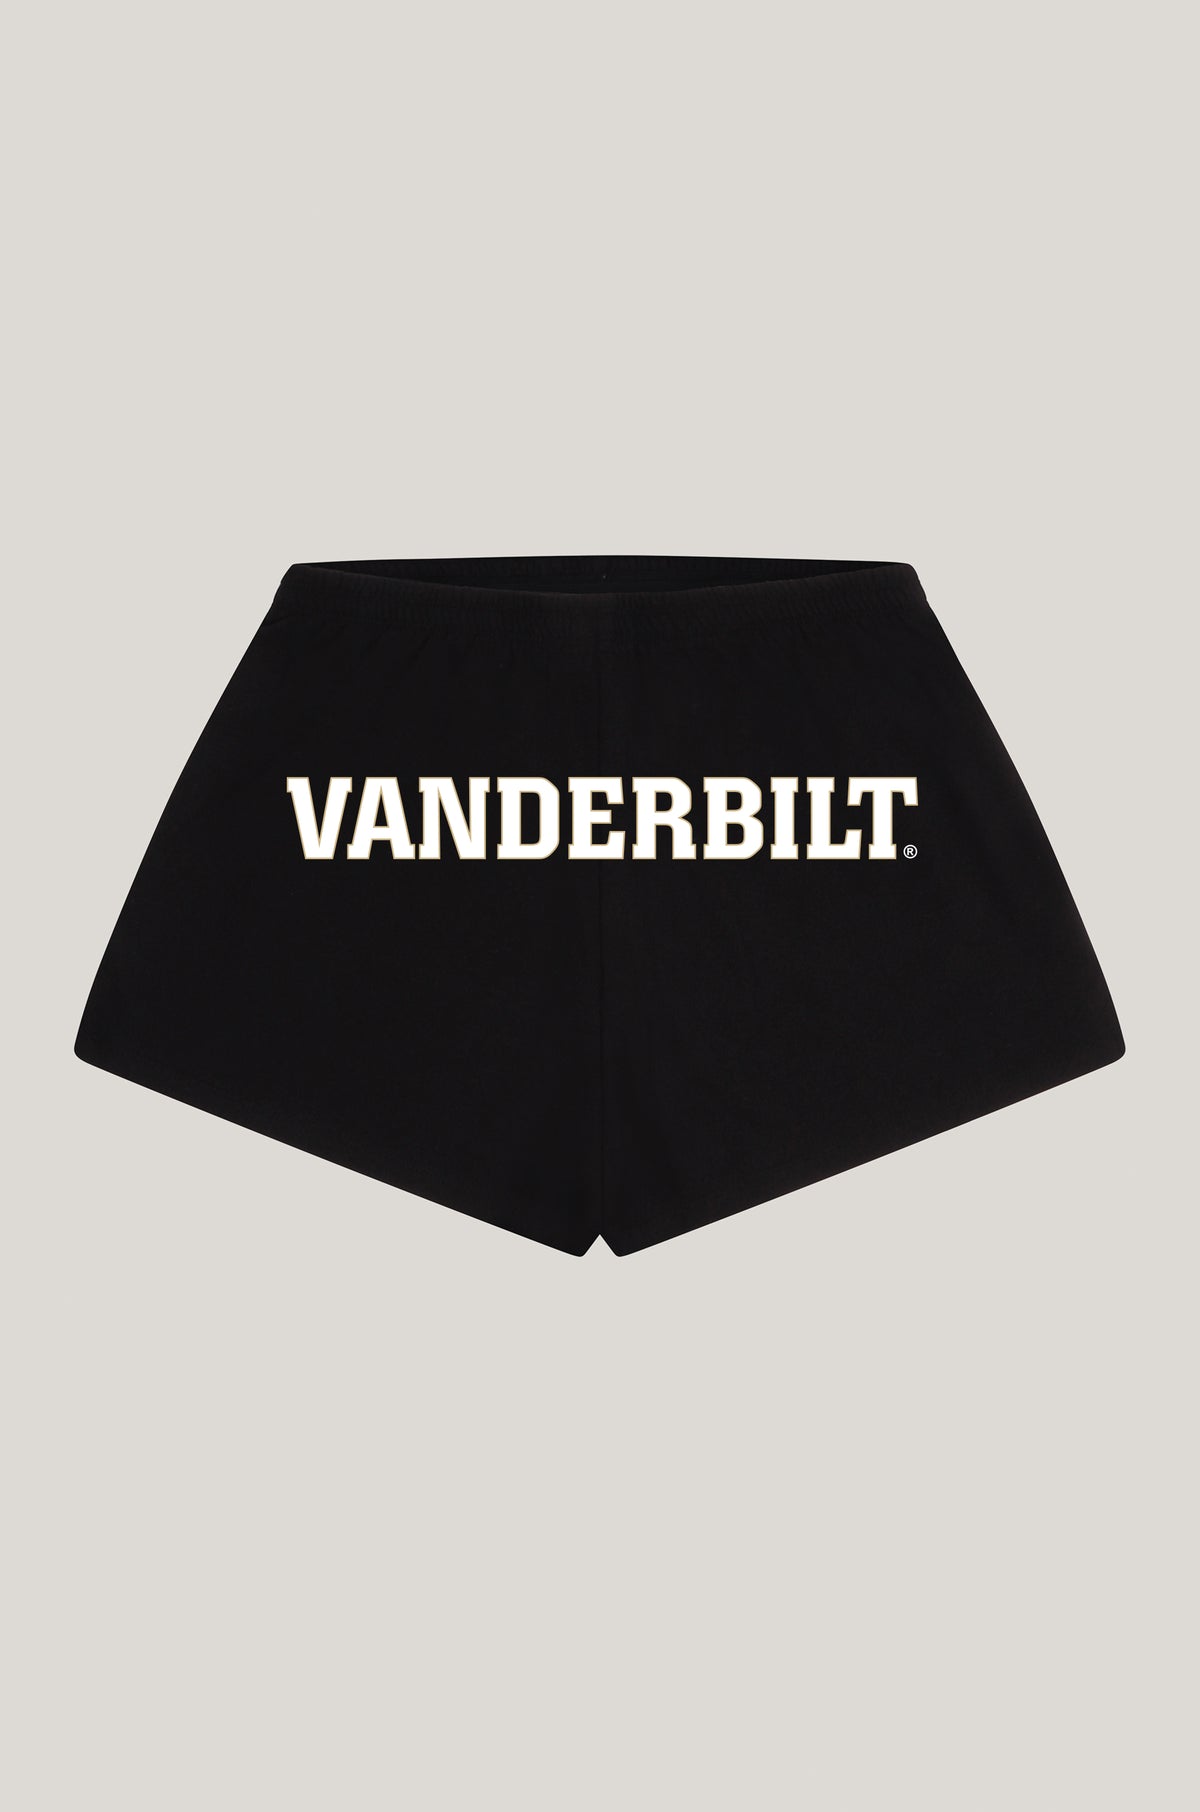 Vanderbilt P.E. Shorts